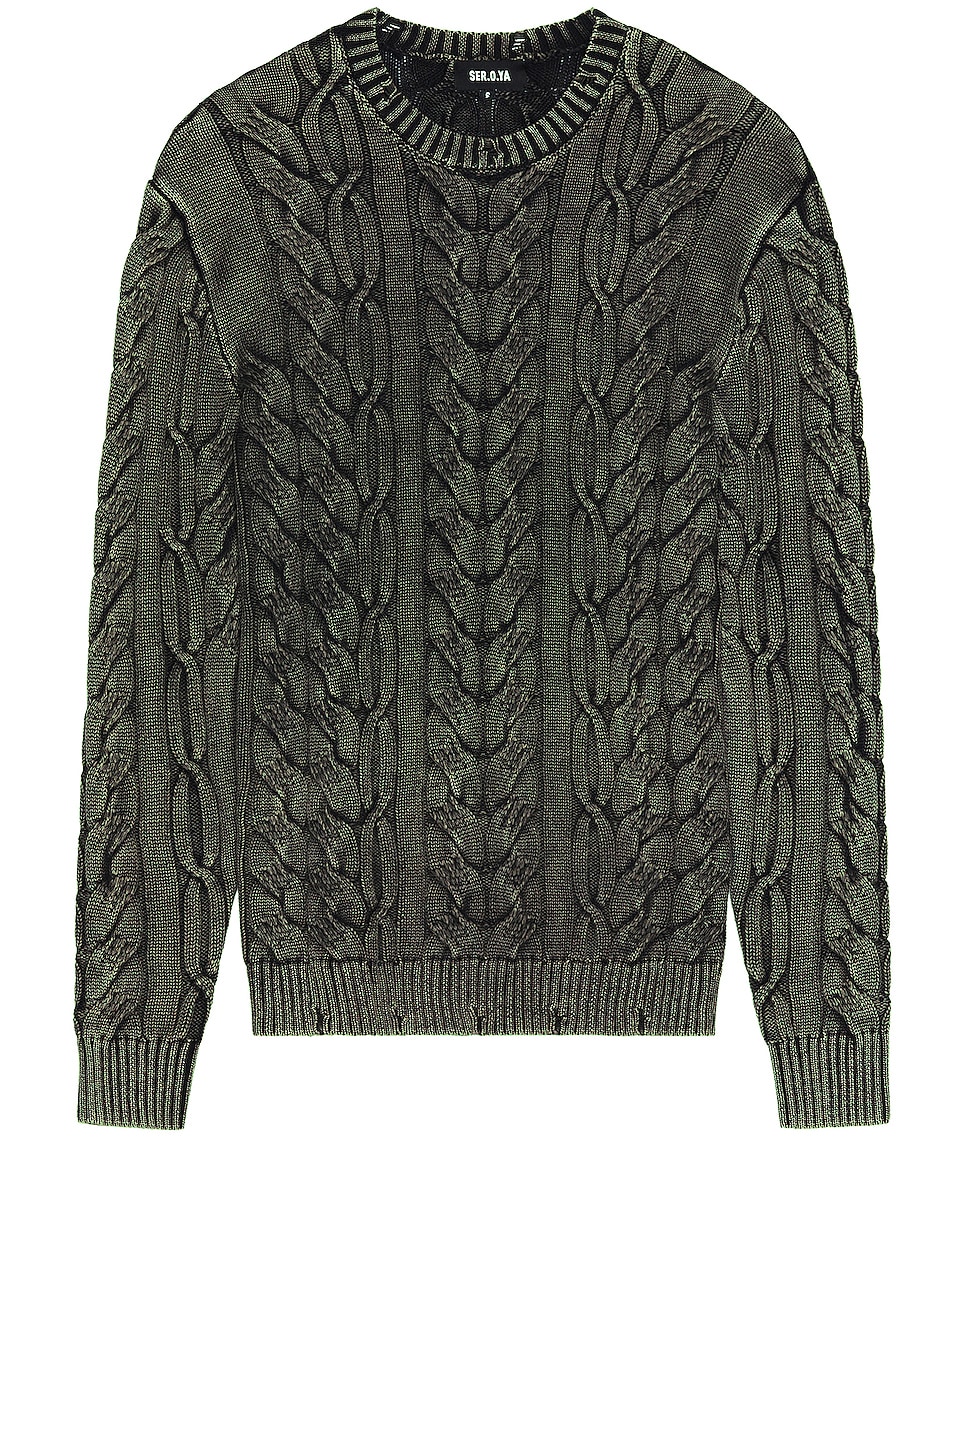 SER.O.YA Lewis Sweater in Black Washed | REVOLVE